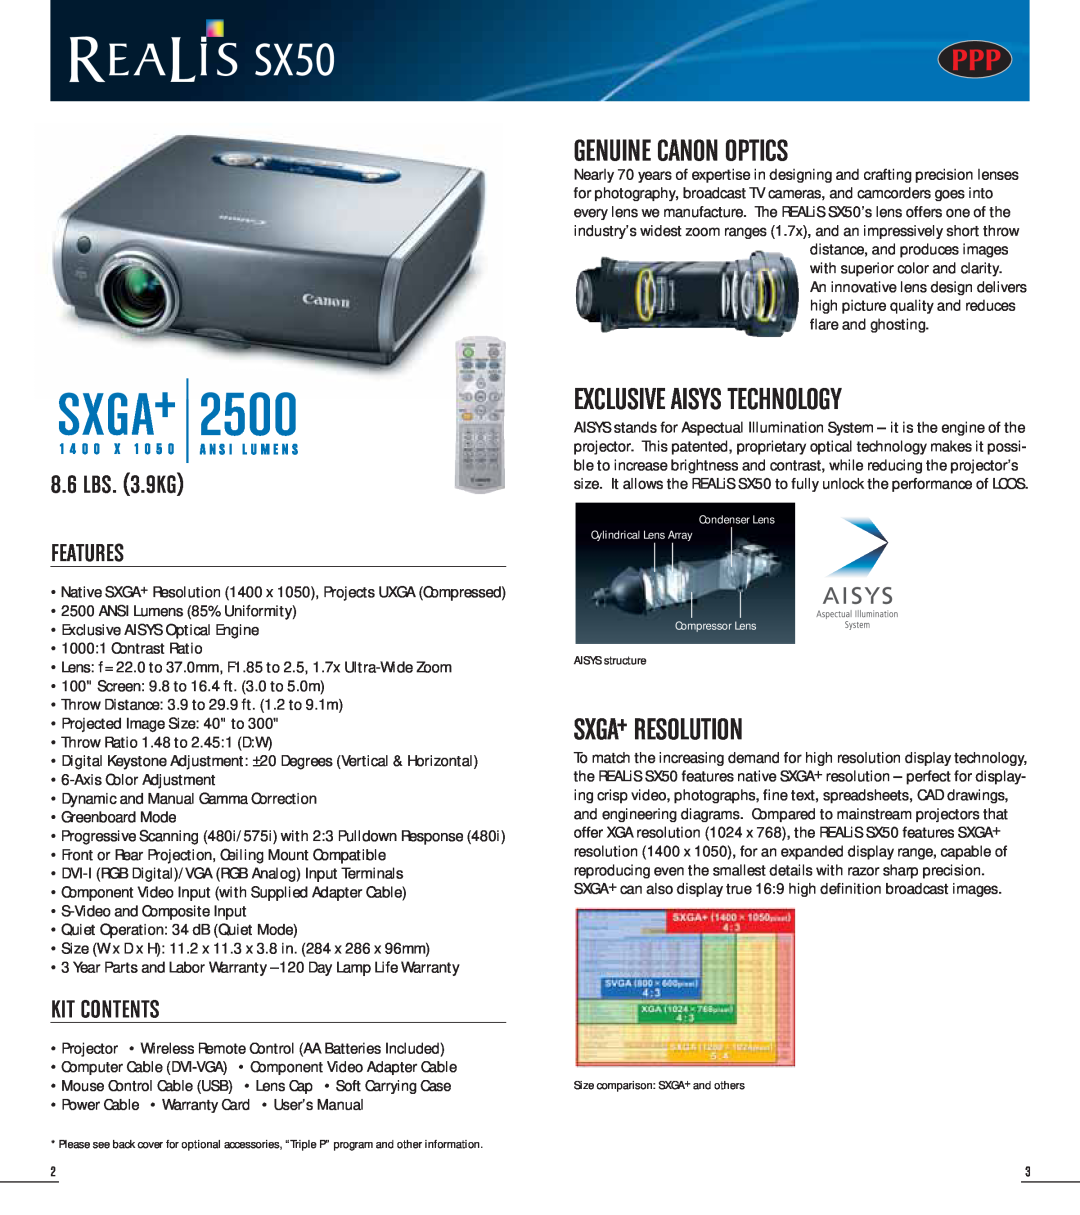 Canon RE-455X, LV-X5 Features, Kit Contents, 2500, Genuine Canon Optics, Sxga+ Resolution, Exclusive Aisys Technology 